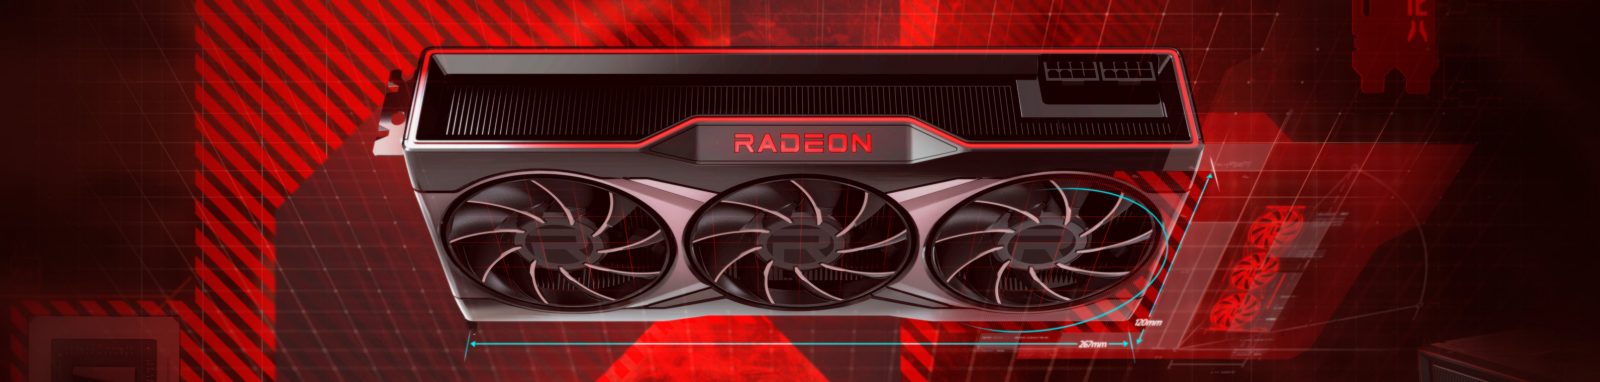 AMD-Radeon-Hero-Banner-2-1600x382.jpg